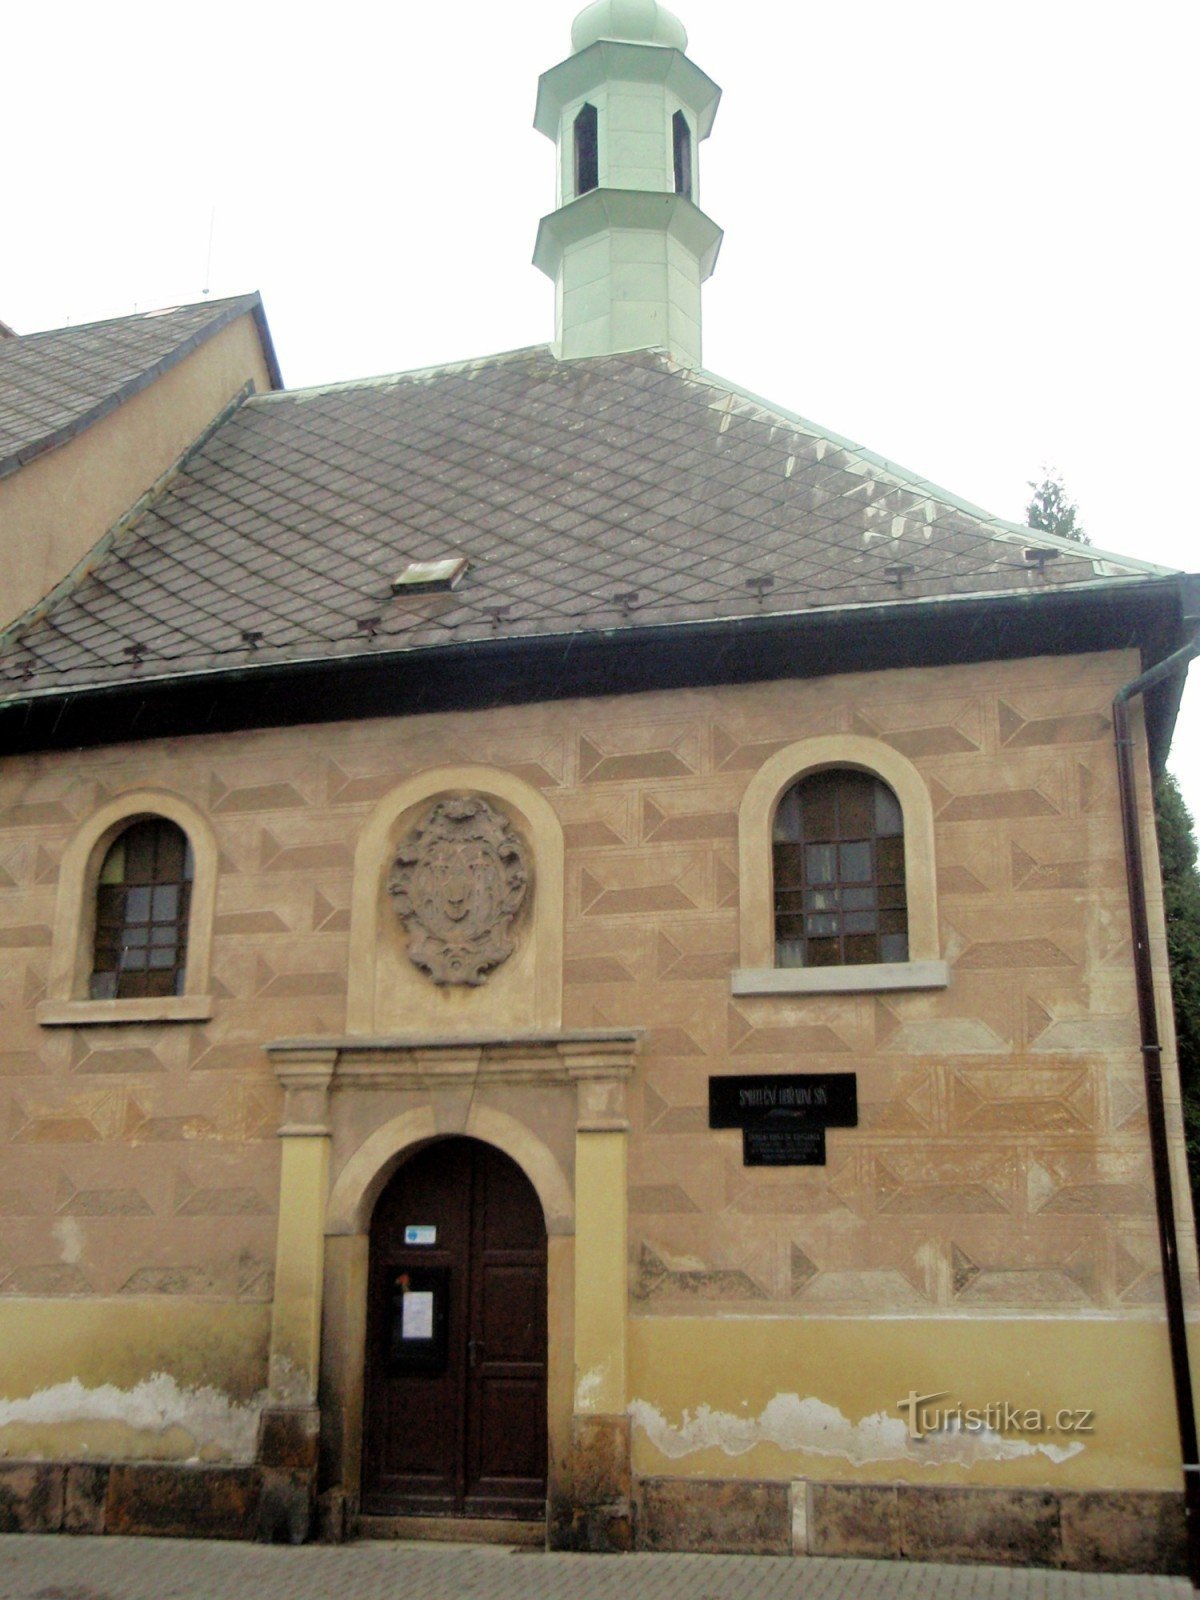 Chapel of St. Wolfgang